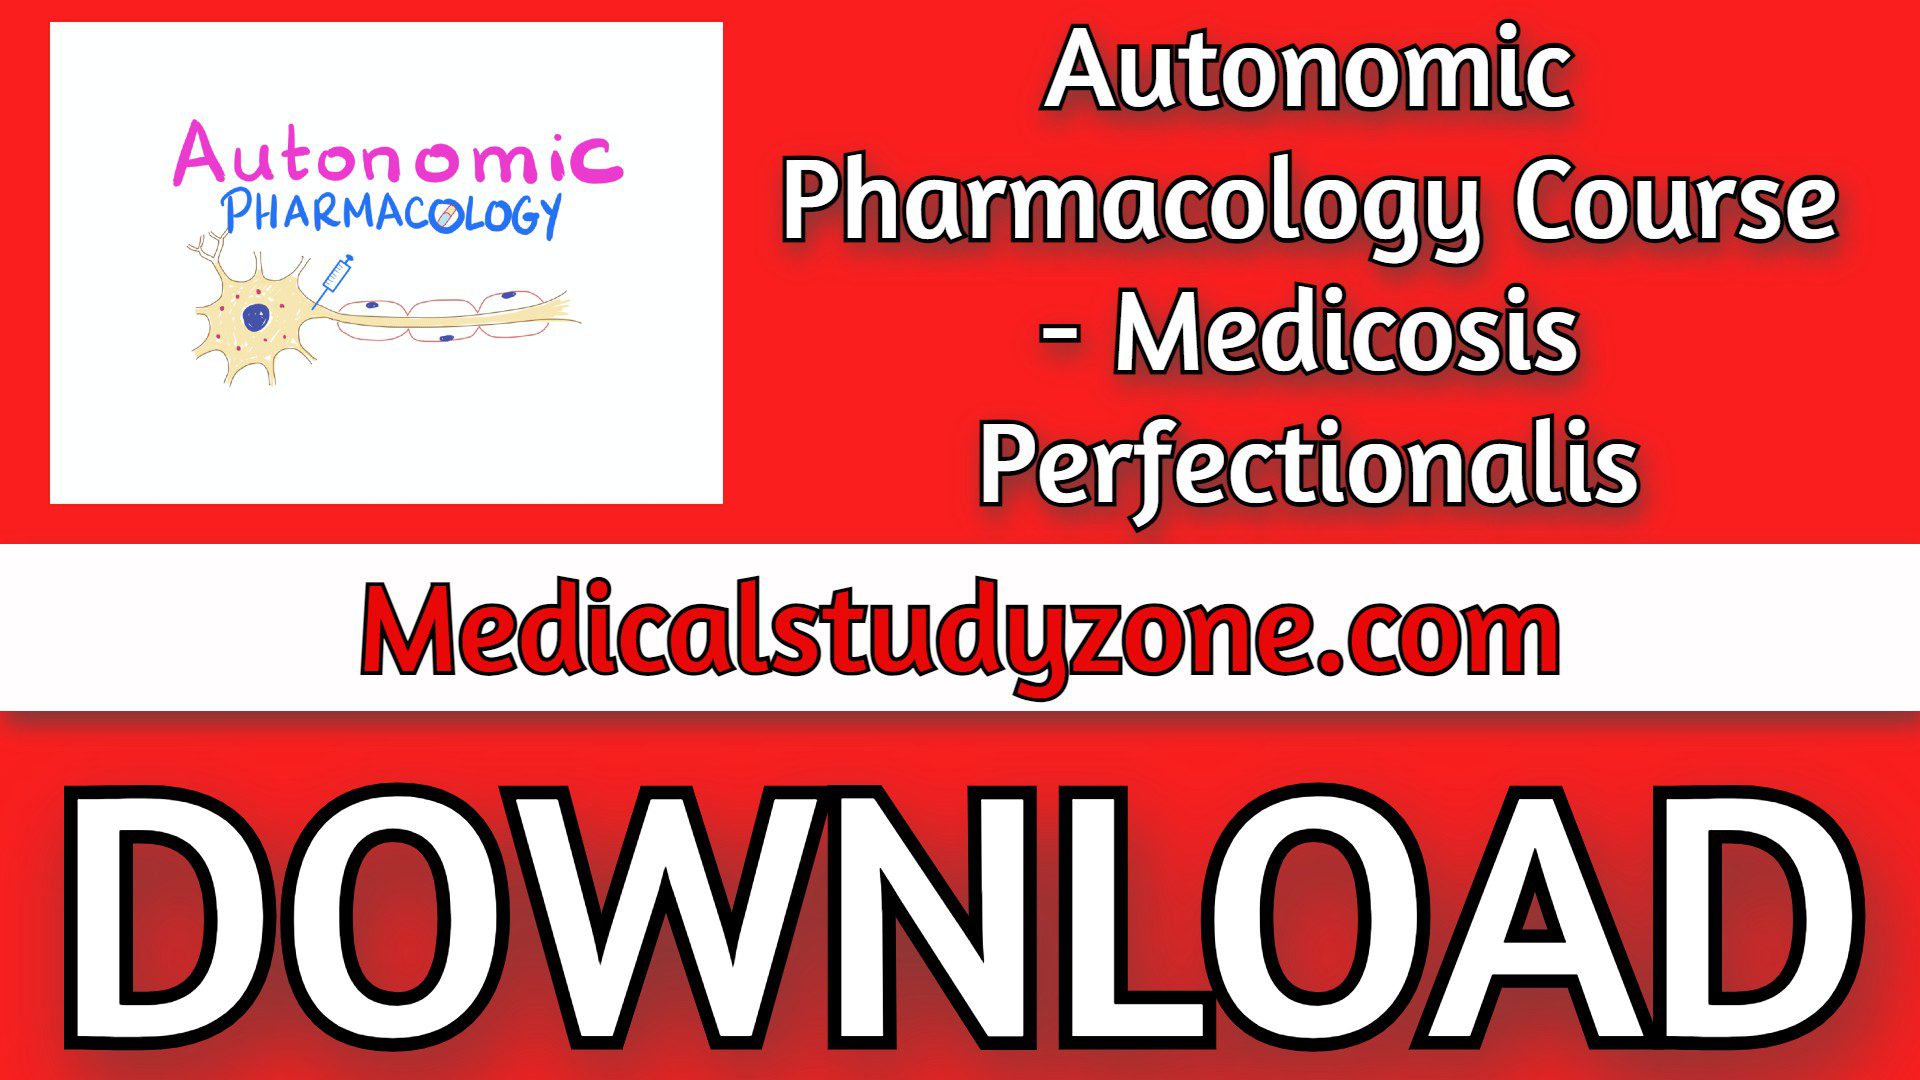 Autonomic Pharmacology Course 2023 - Medicosis Perfectionalis Free Download